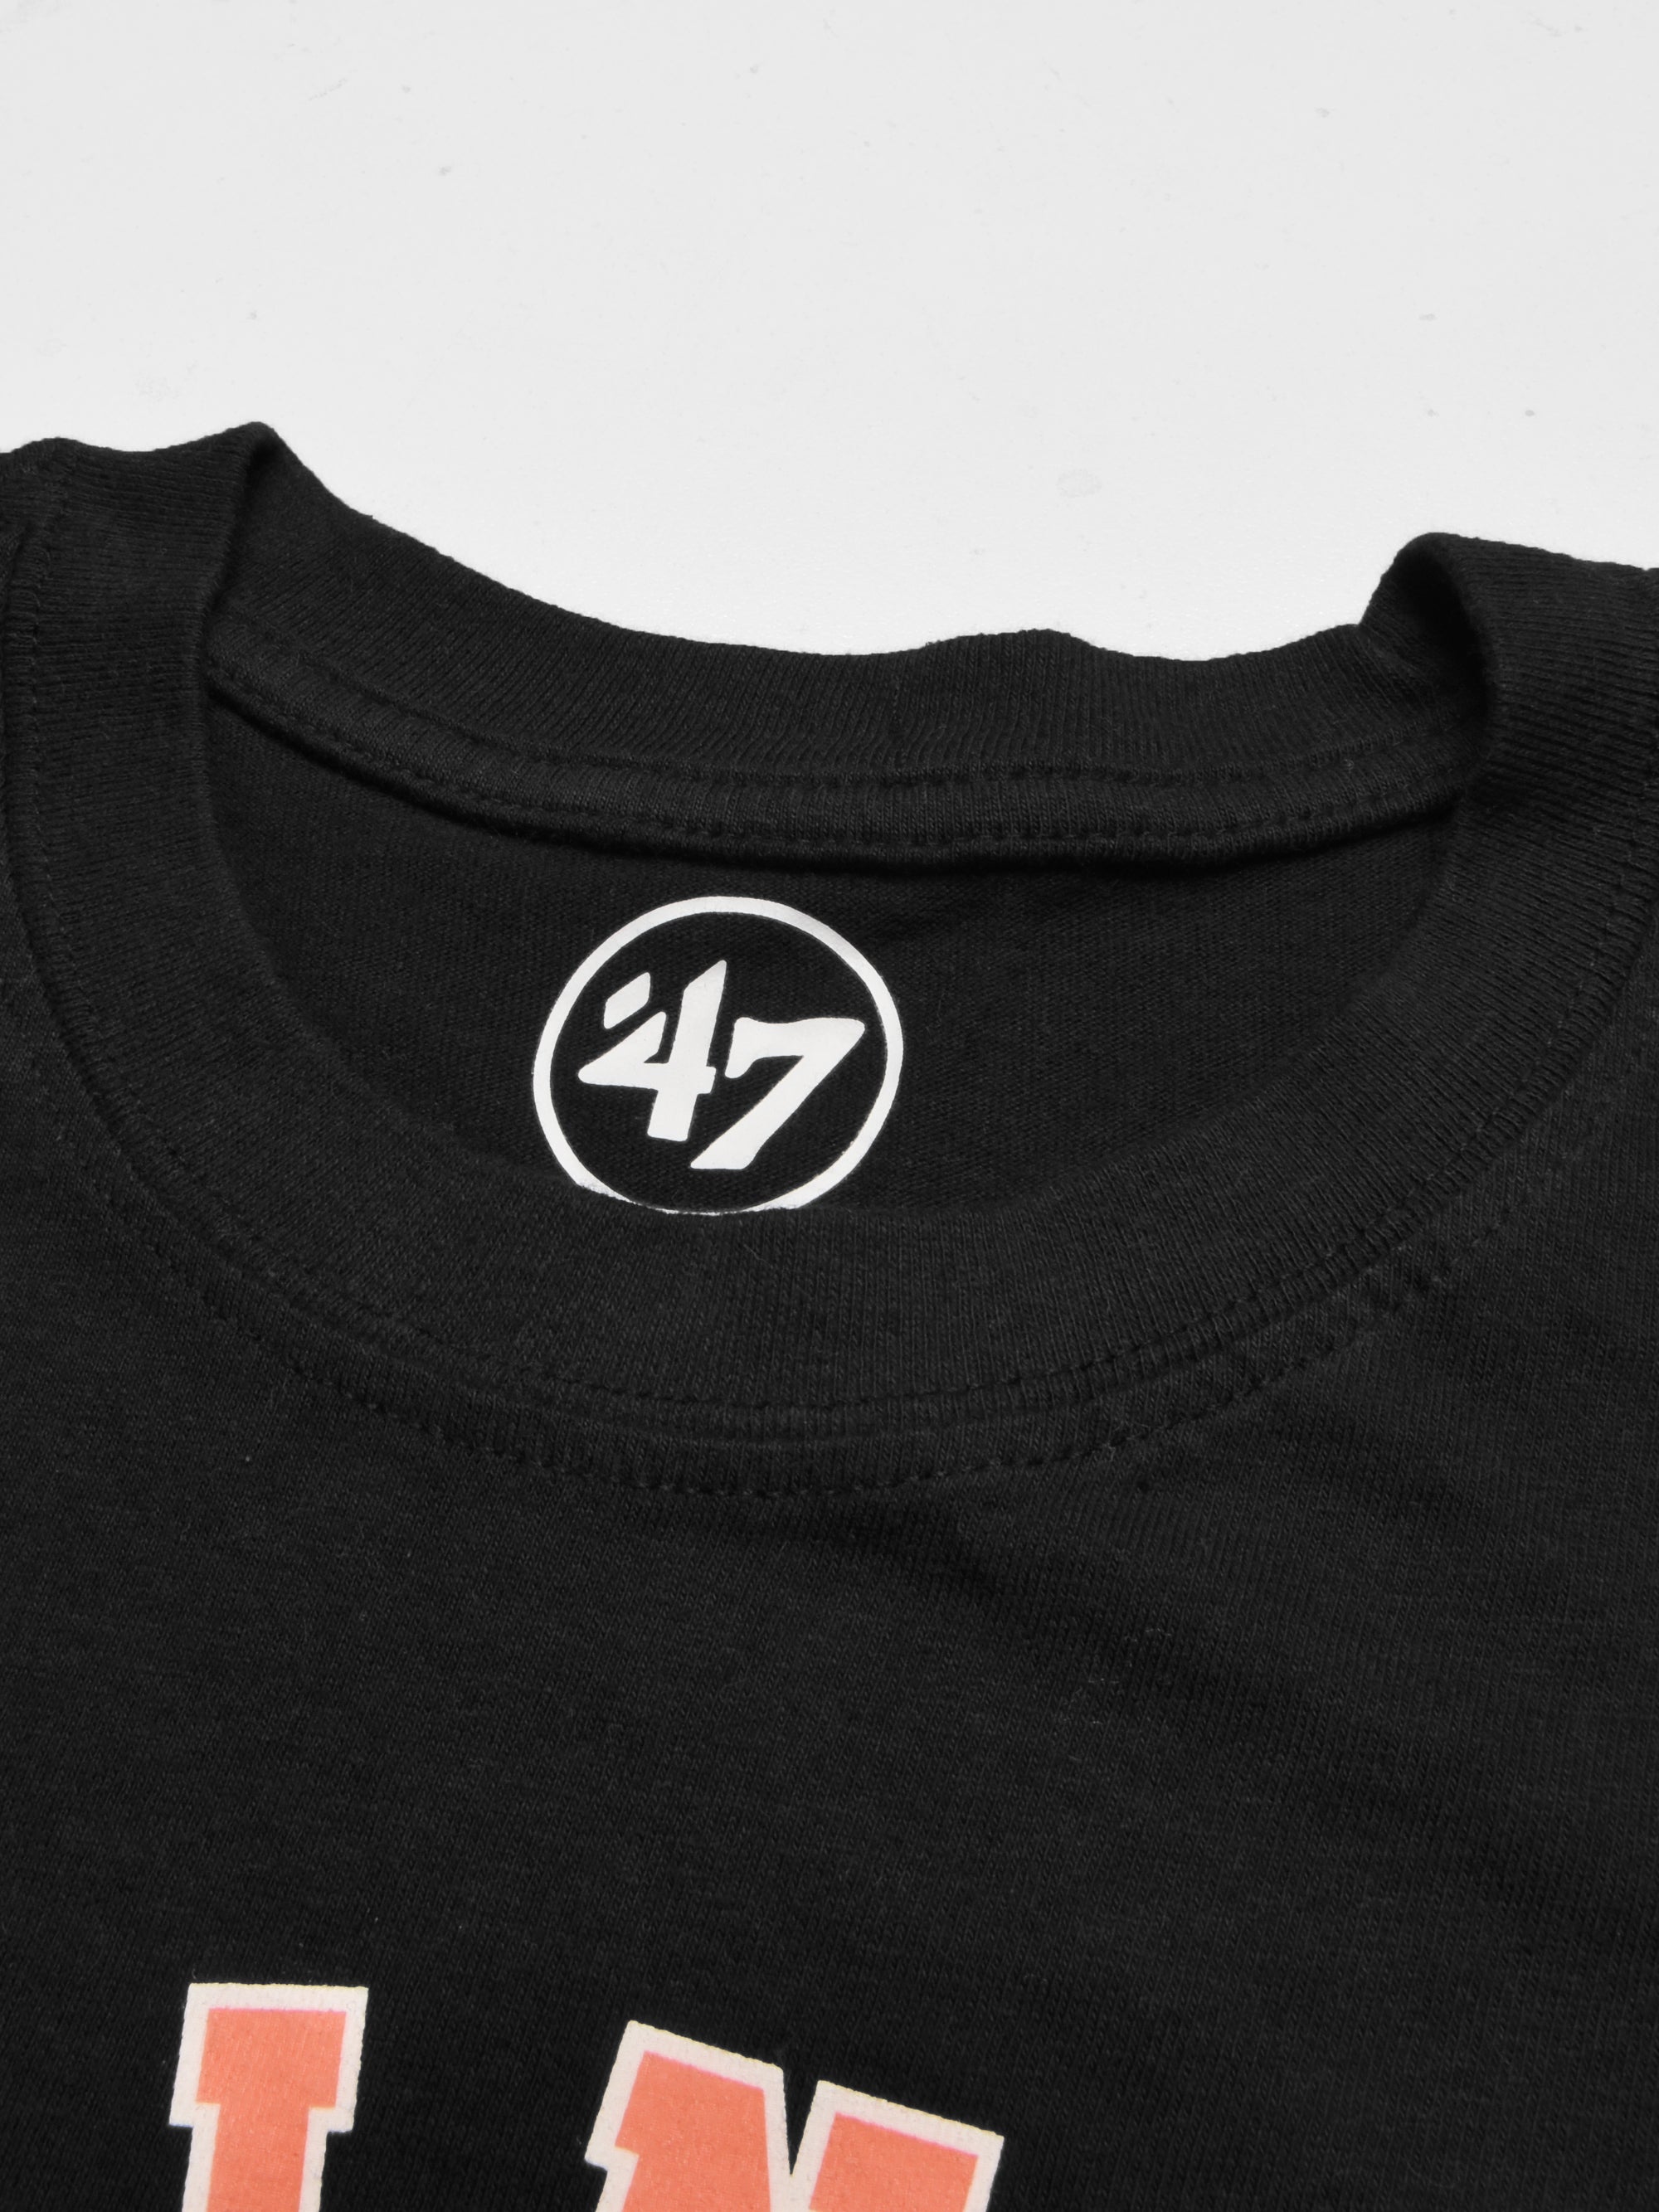 47 Single Jersey Crew Neck Long Sleeve Shirt For Men-Black-SP1837